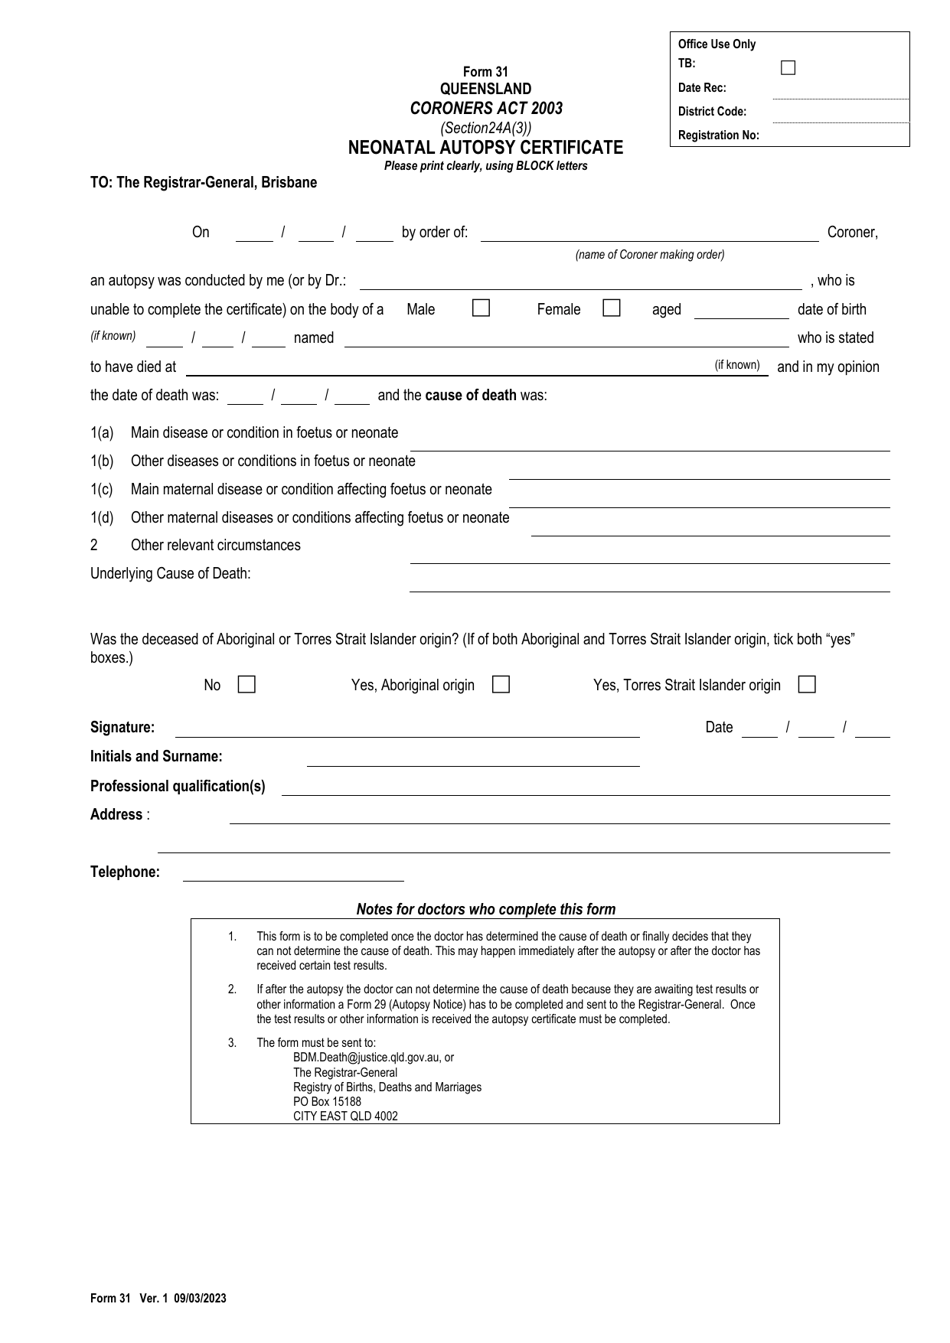 Form 31 Neonatal Autopsy Certificate - Queensland, Australia, Page 1